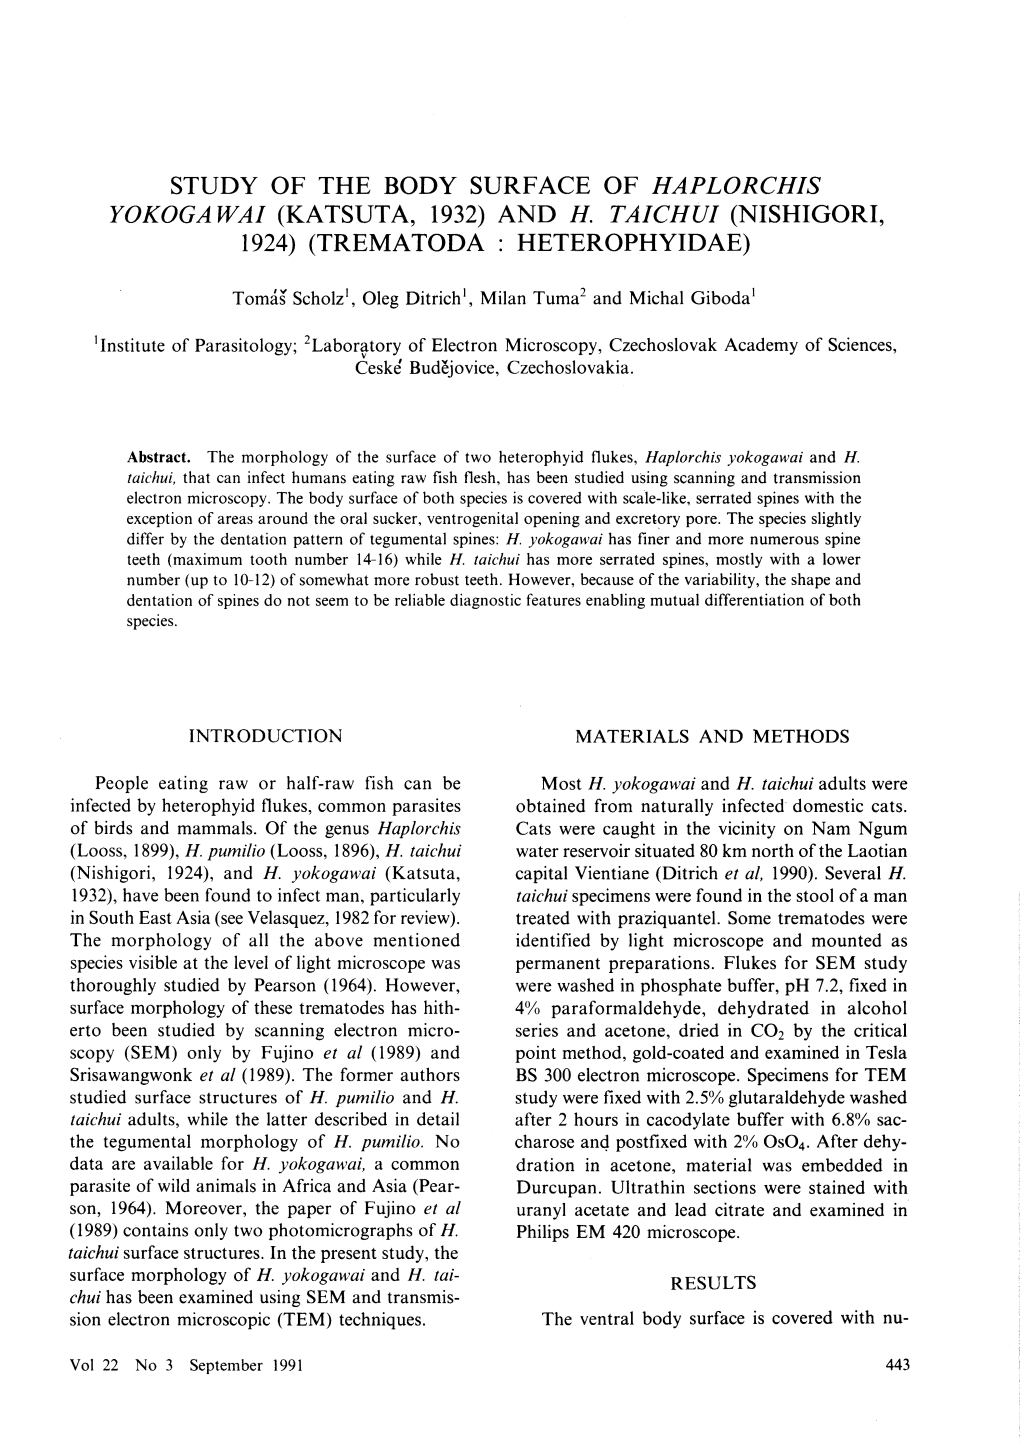 Study of the Body Surface of Haplorchis Yokogawai (Katsuta, 1932) and H